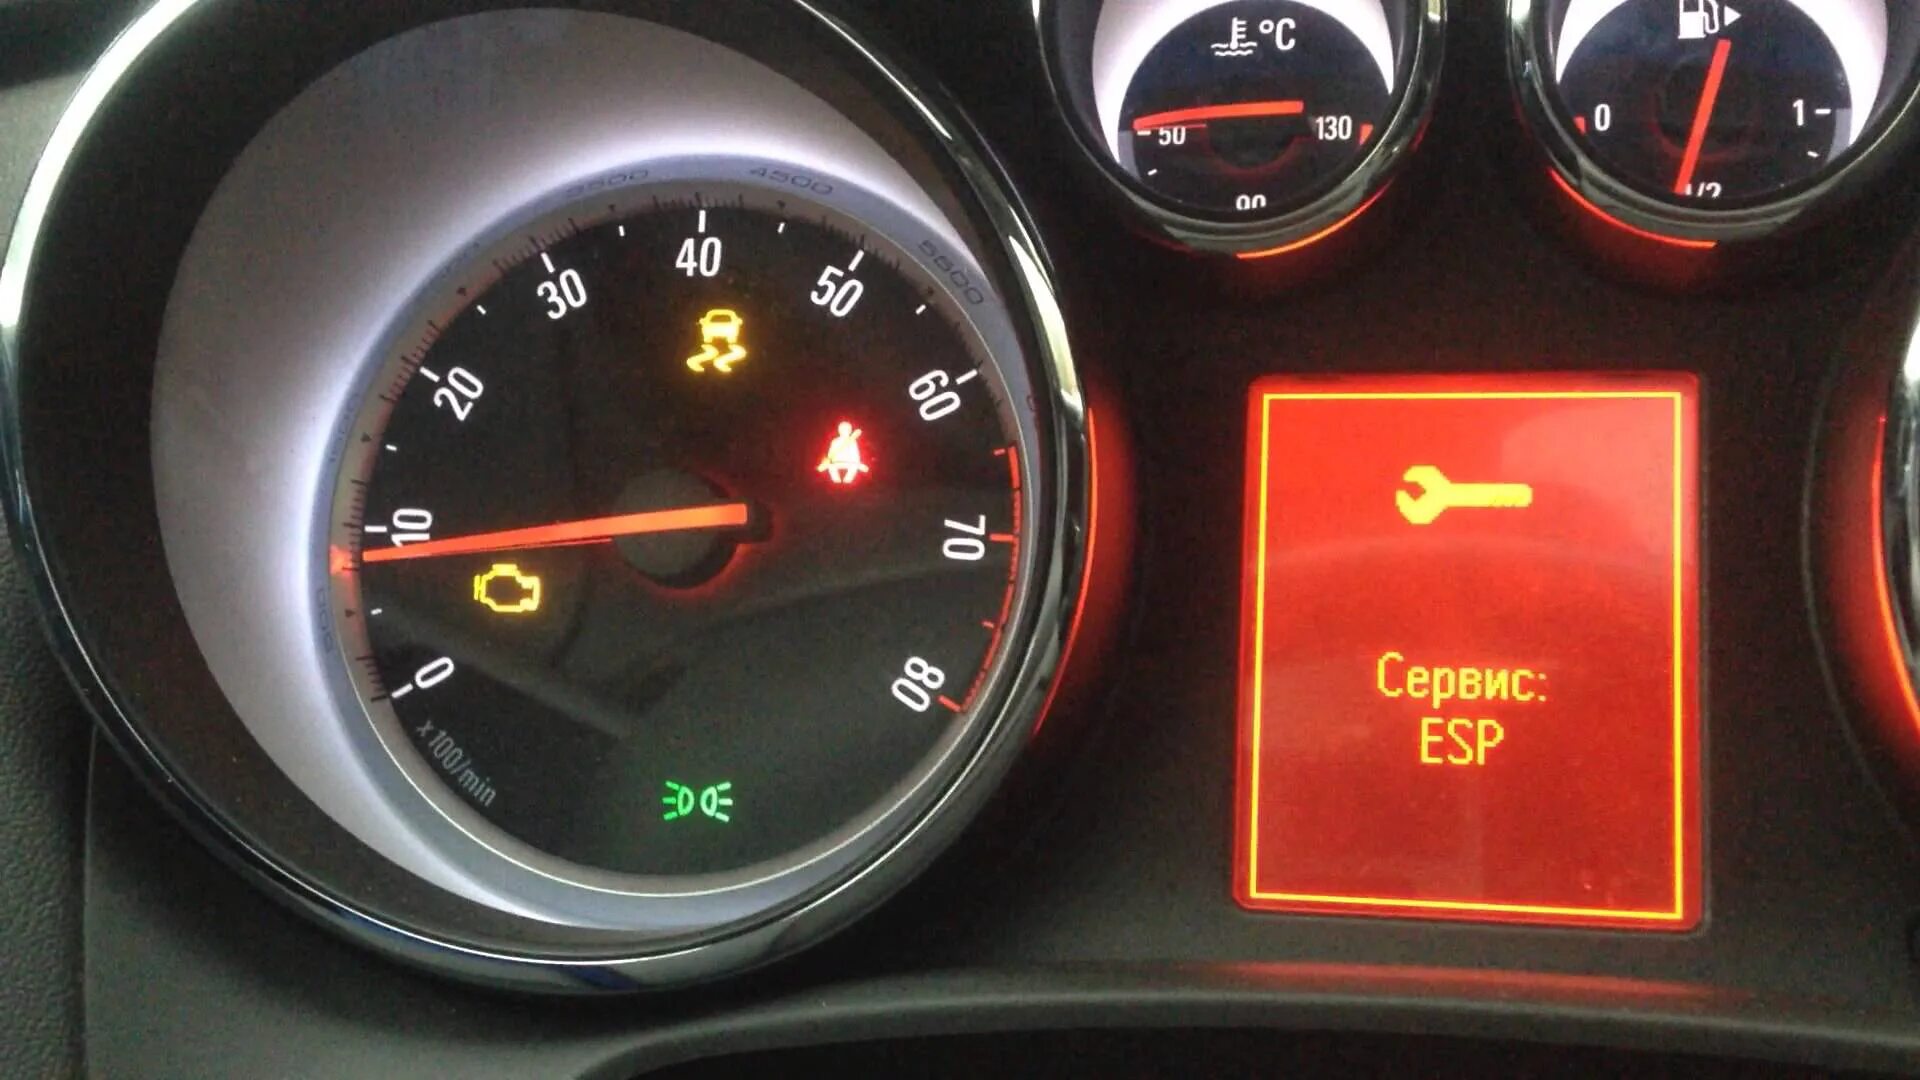 Значок на панели скользкая дорога. Opel Astra j service ESP. Opel Astra j check ESP.